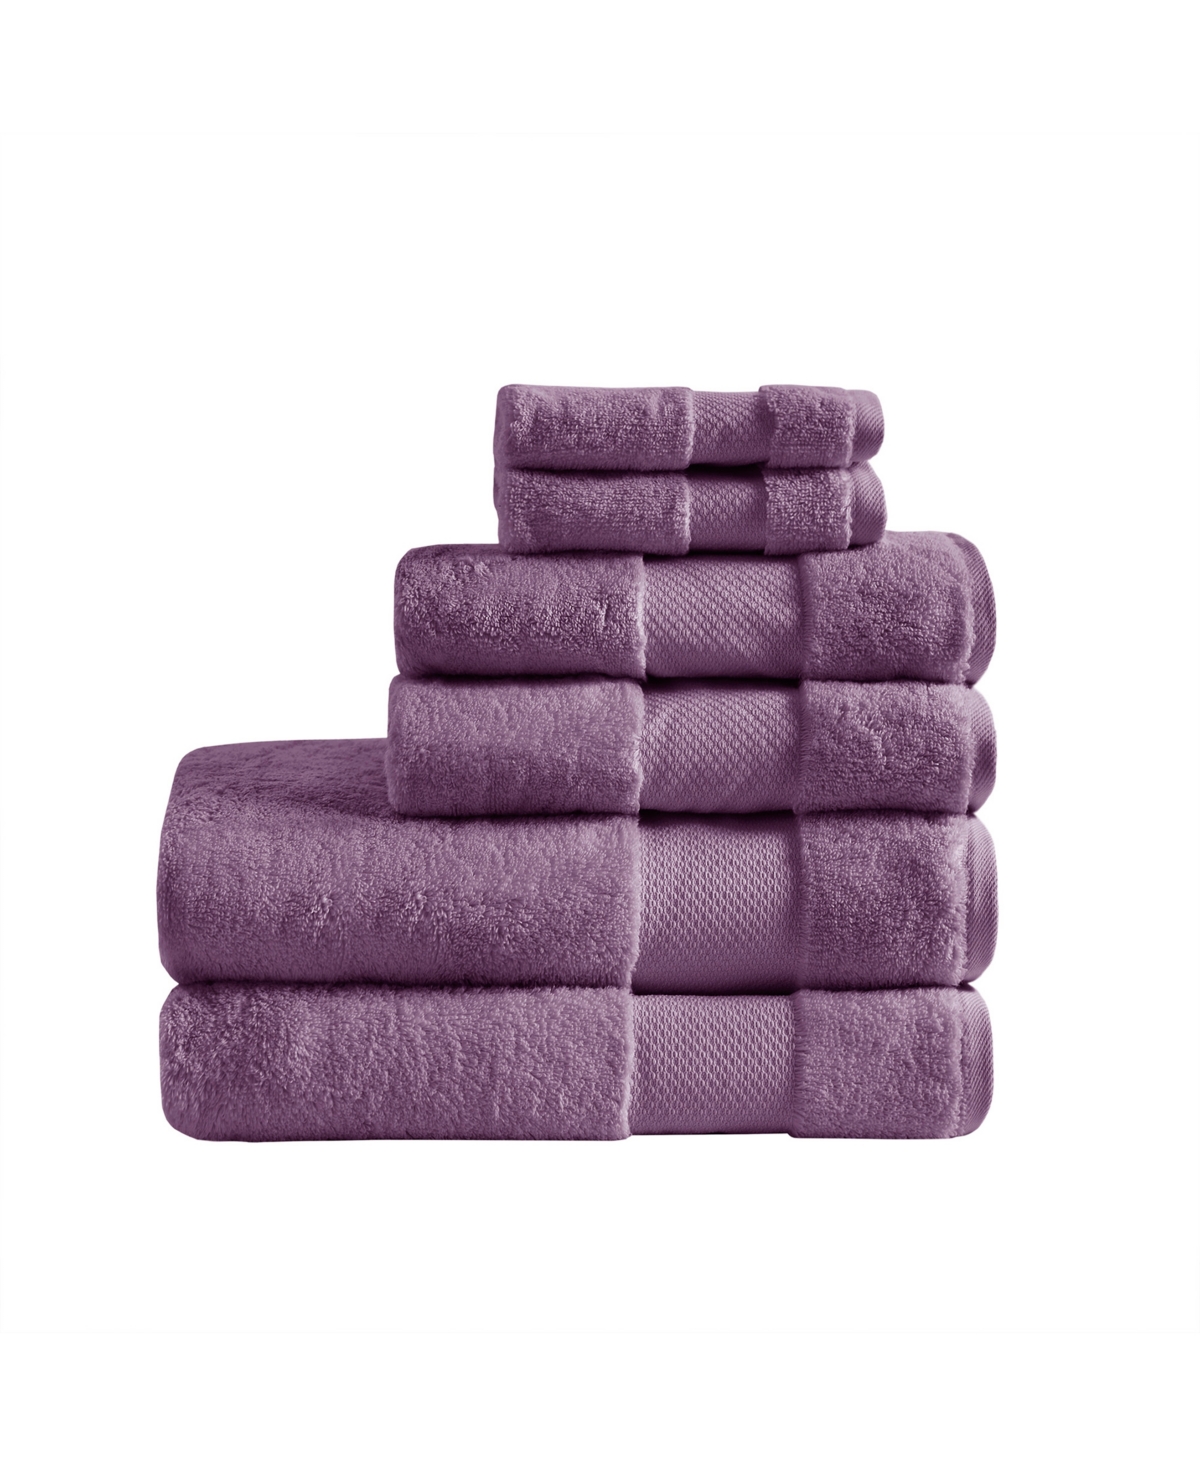 Madison Park Turkish Cotton 6-pc. Bath Towel Set Bedding In Purple